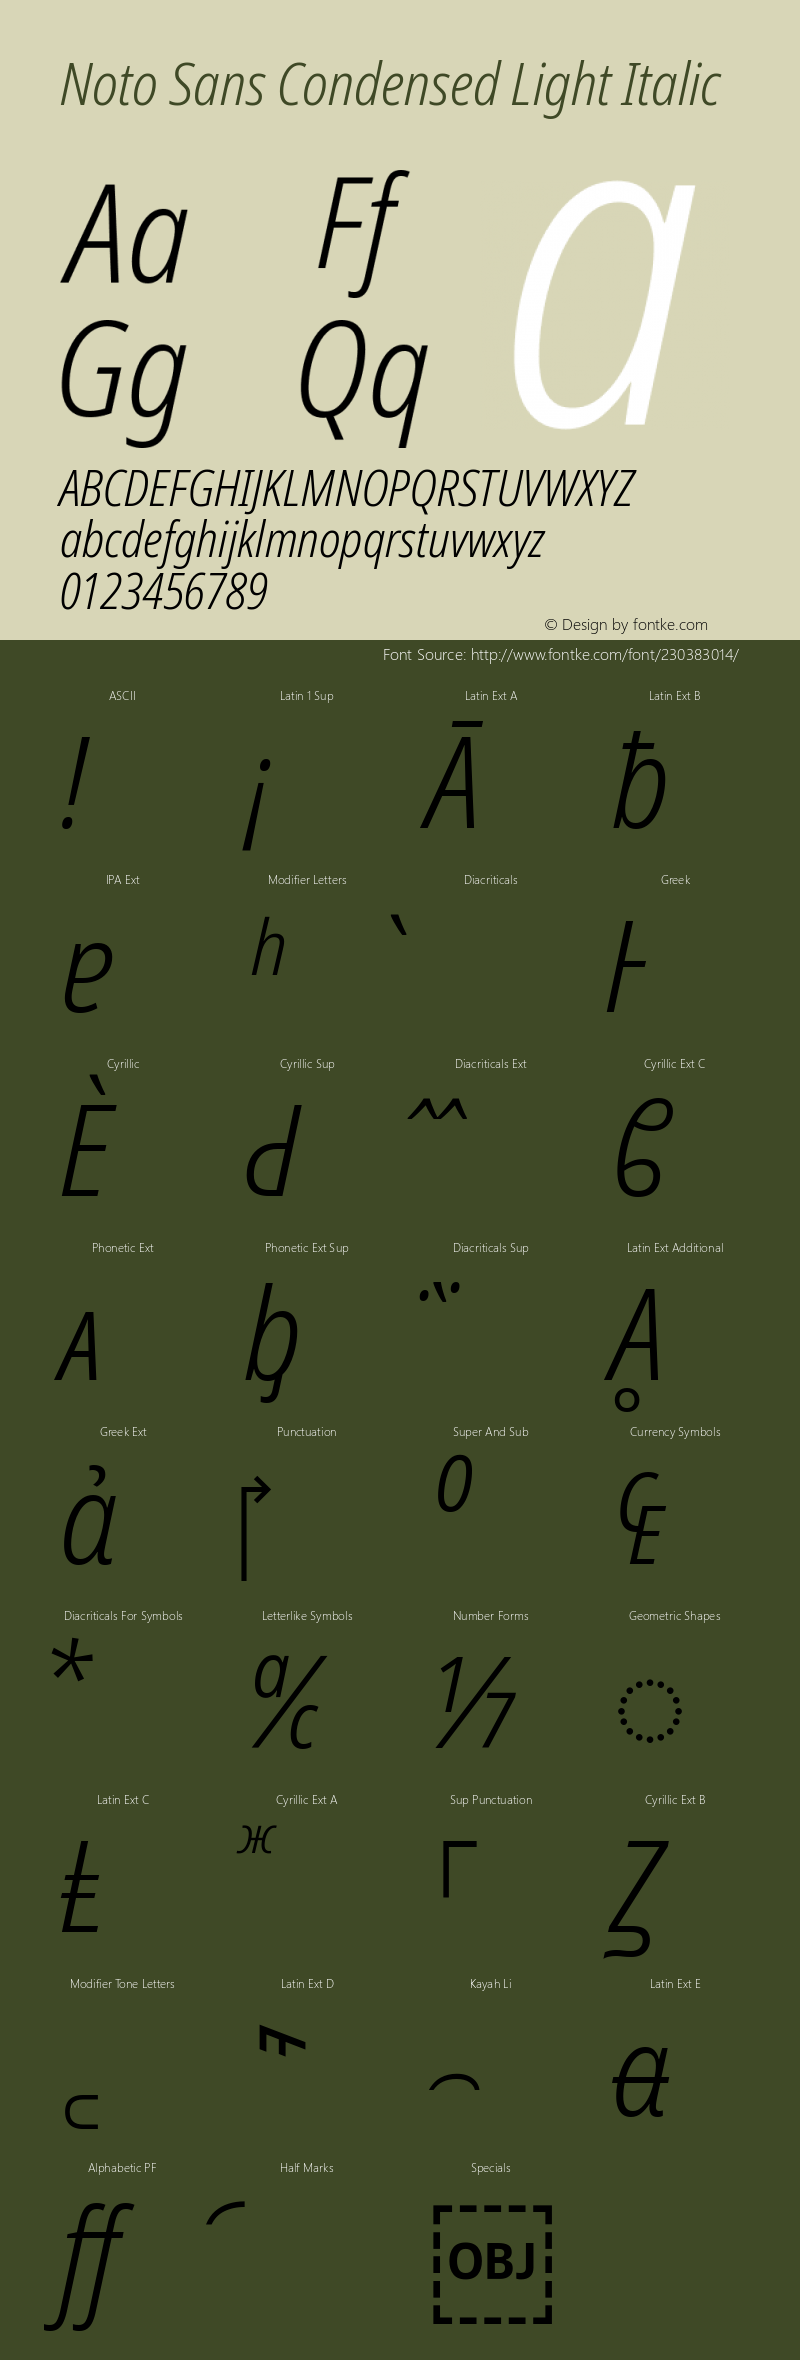 Noto Sans Condensed Light Italic Version 2.008; ttfautohint (v1.8) -l 8 -r 50 -G 200 -x 14 -D latn -f none -a qsq -X 